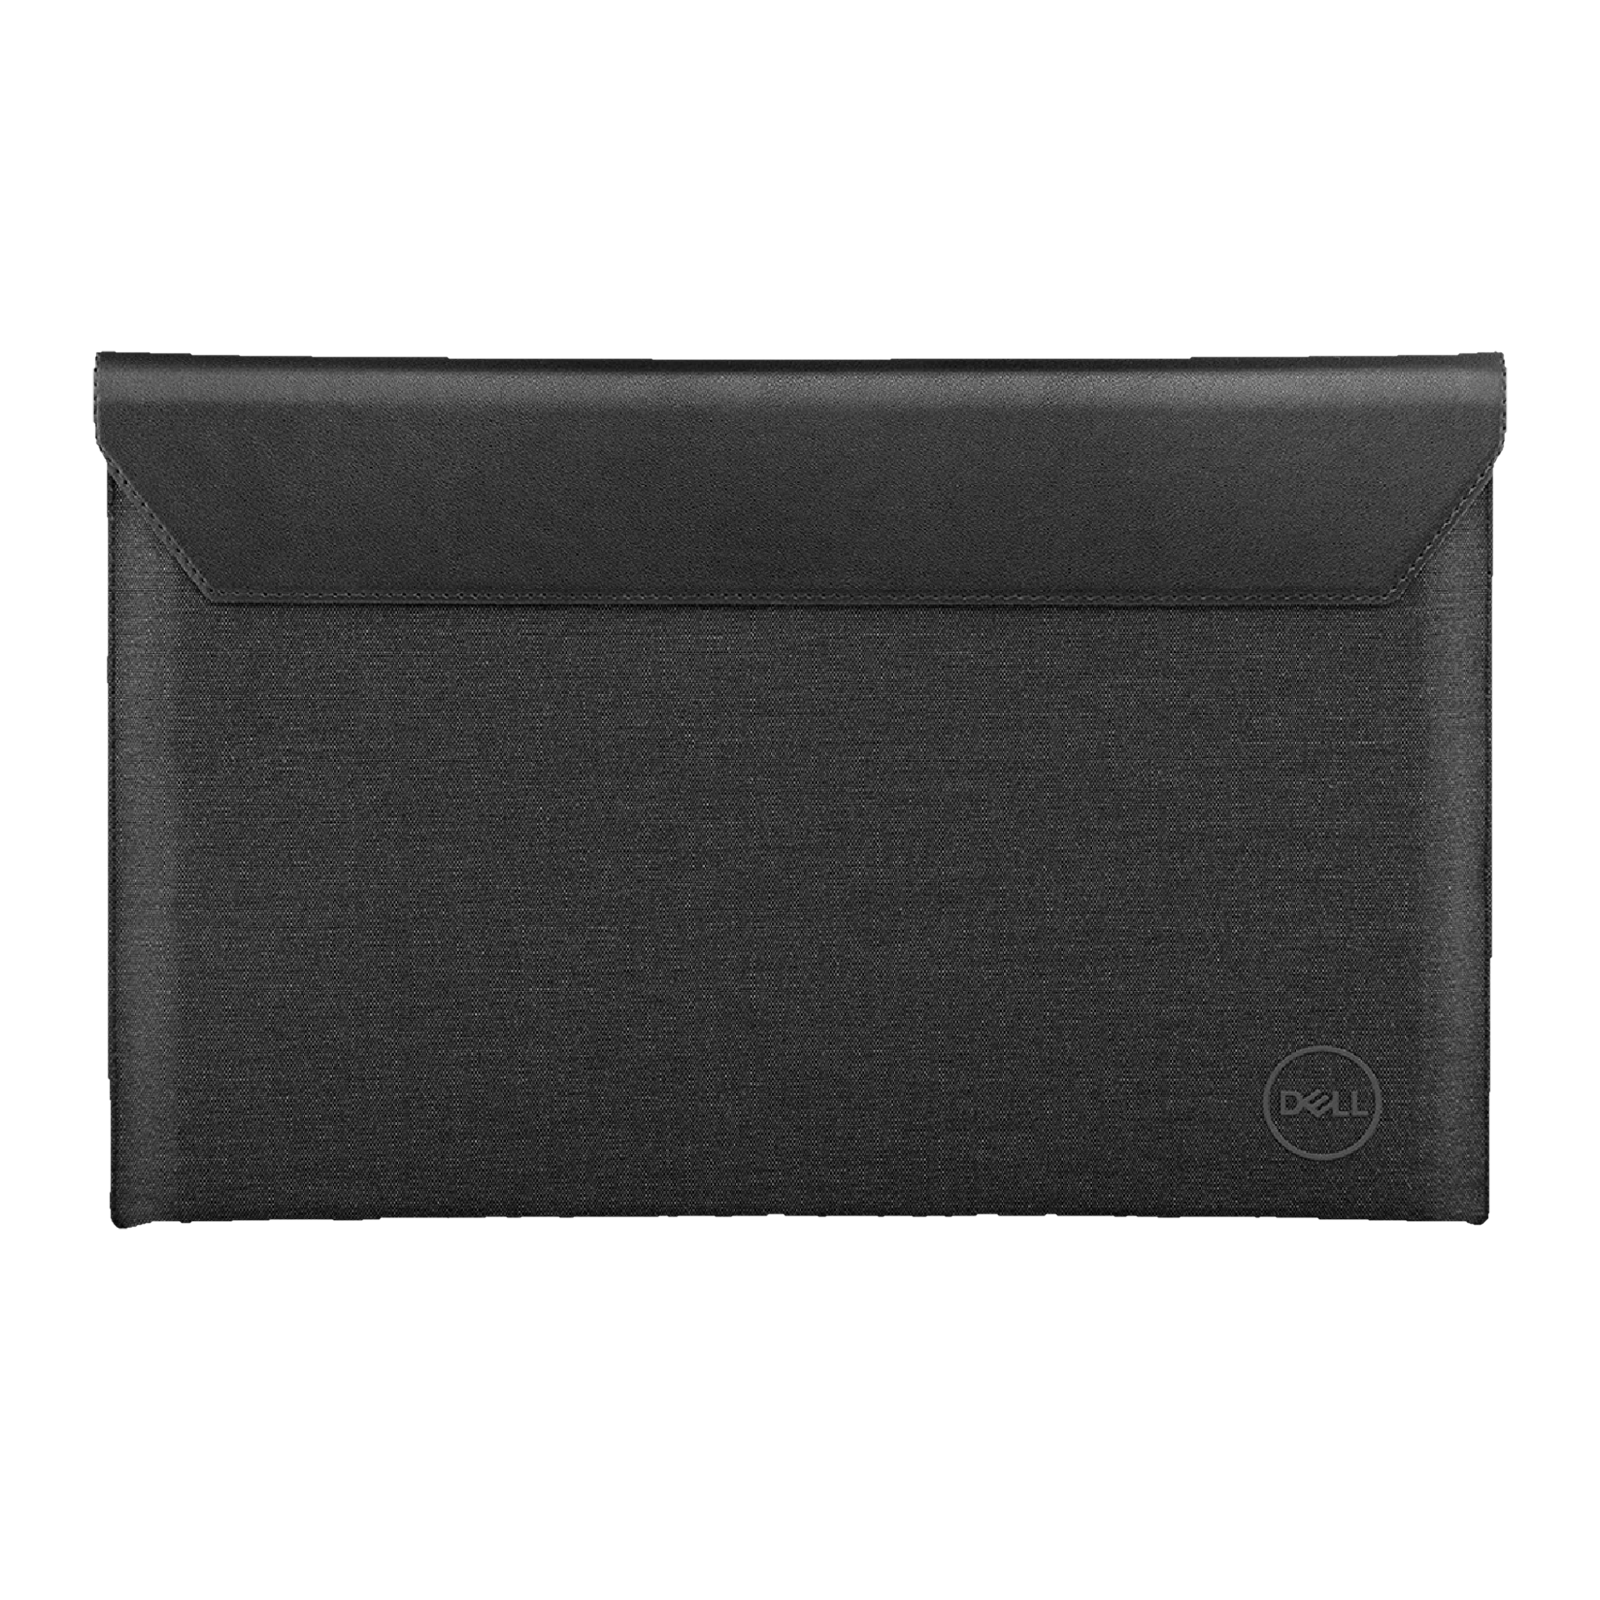 Dell Premier PE1420V Vinyl Laptop Sleeve for 14 Inch Laptop (Water Resistant, Black/Grey)_1